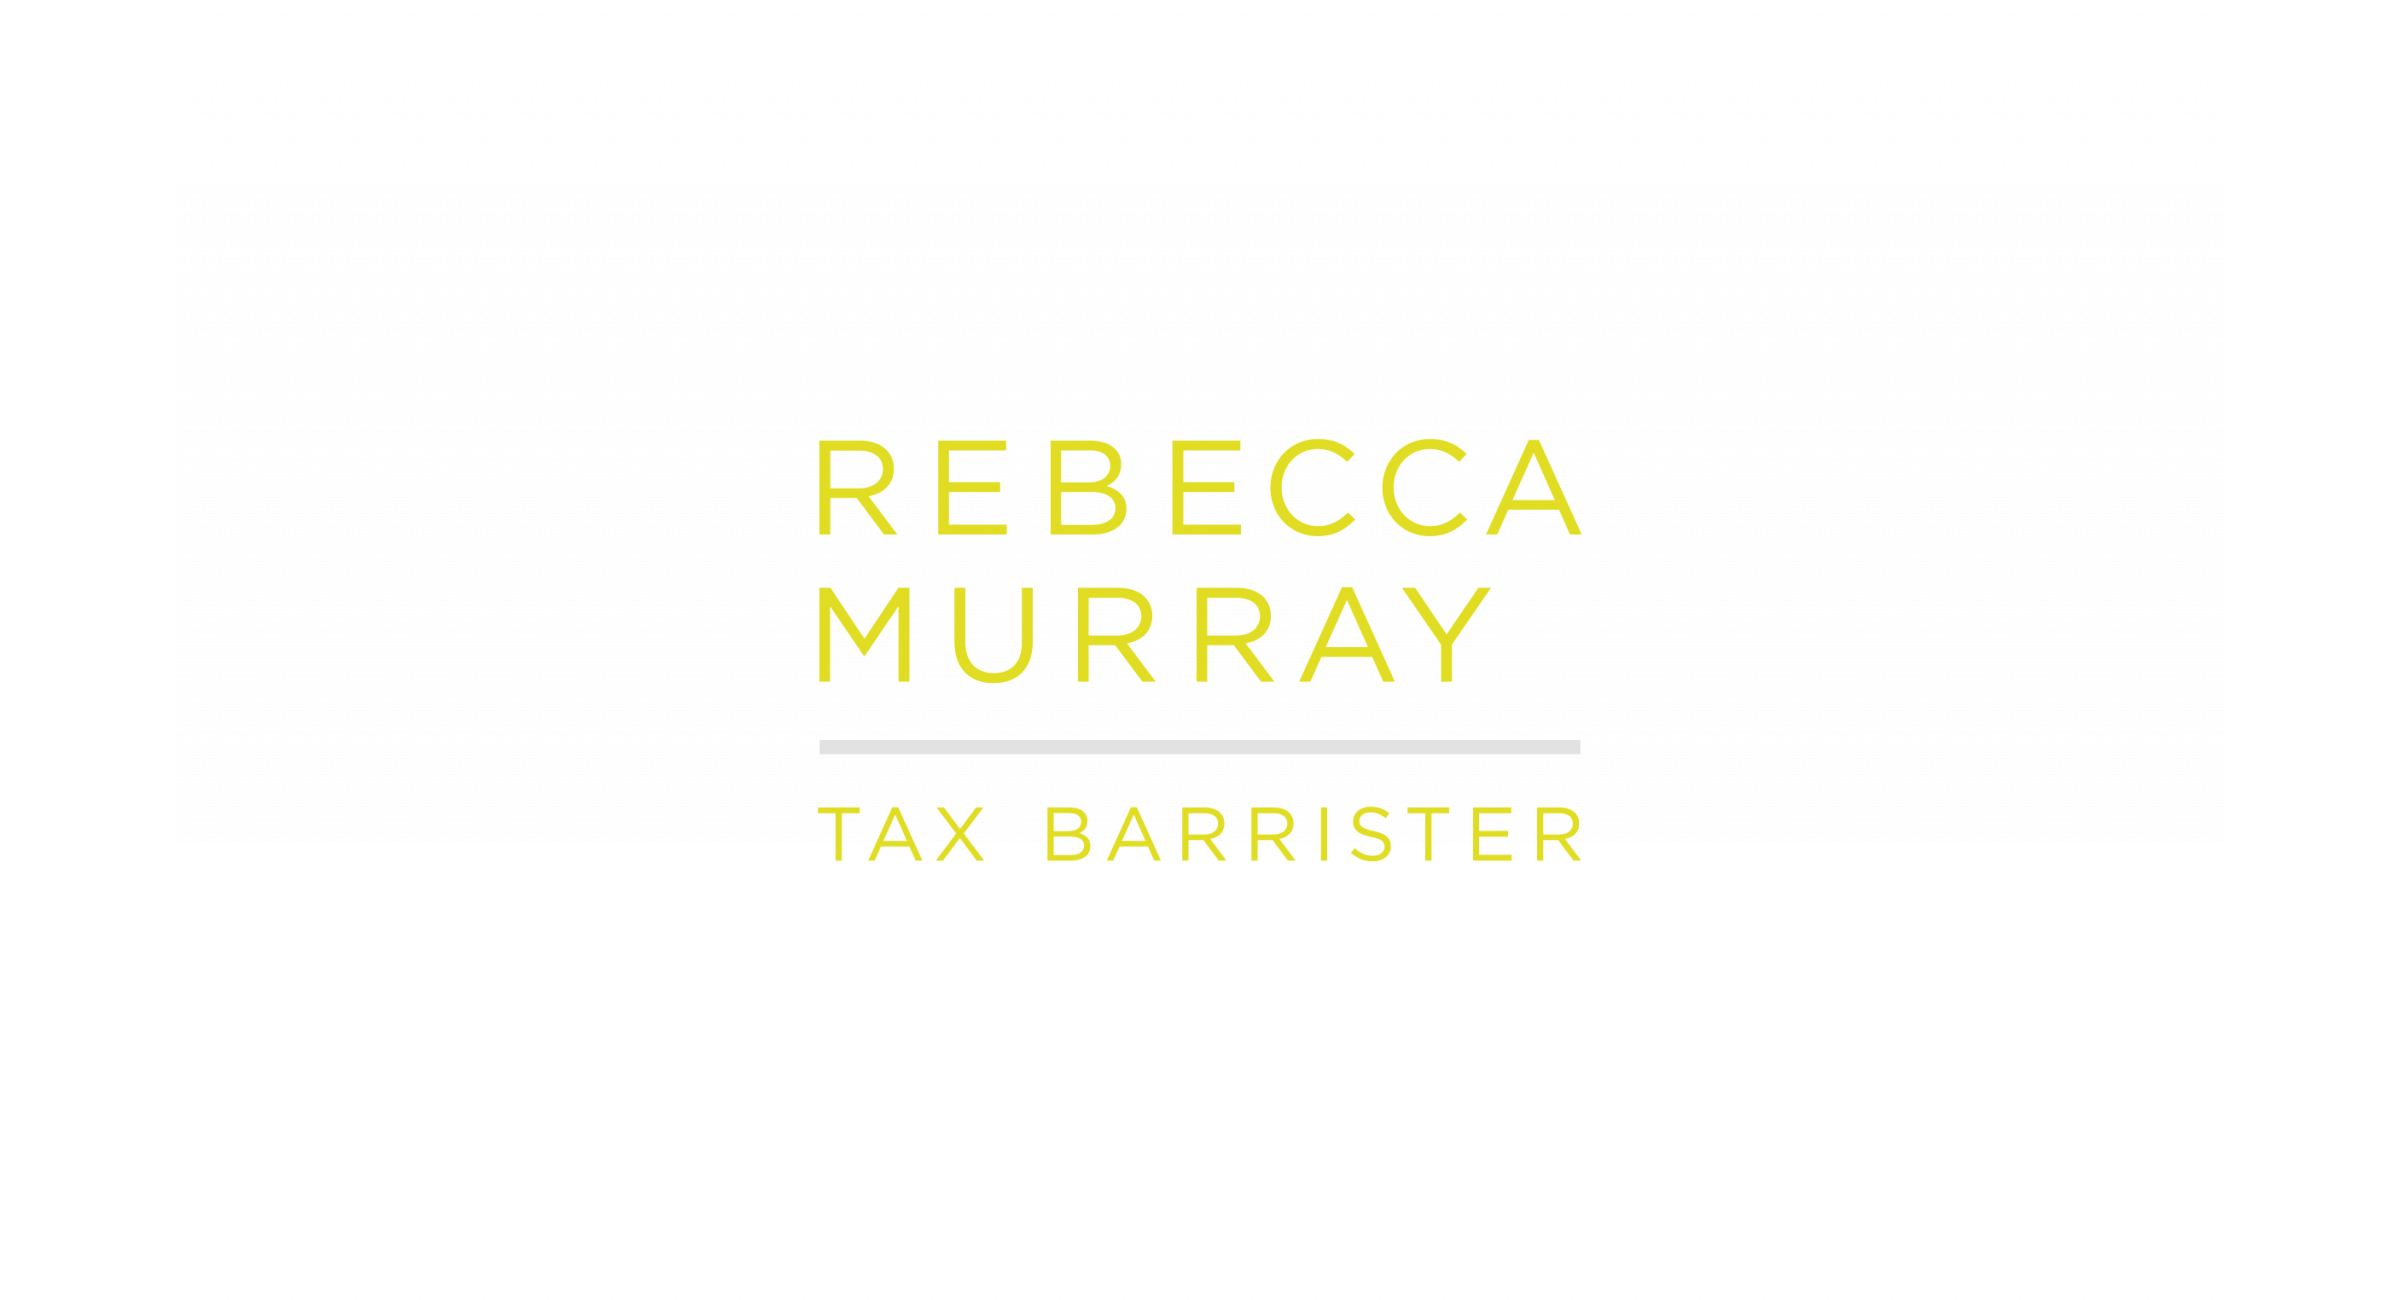 Rebecca Murray Tax Barrister By Peek Creative Limited